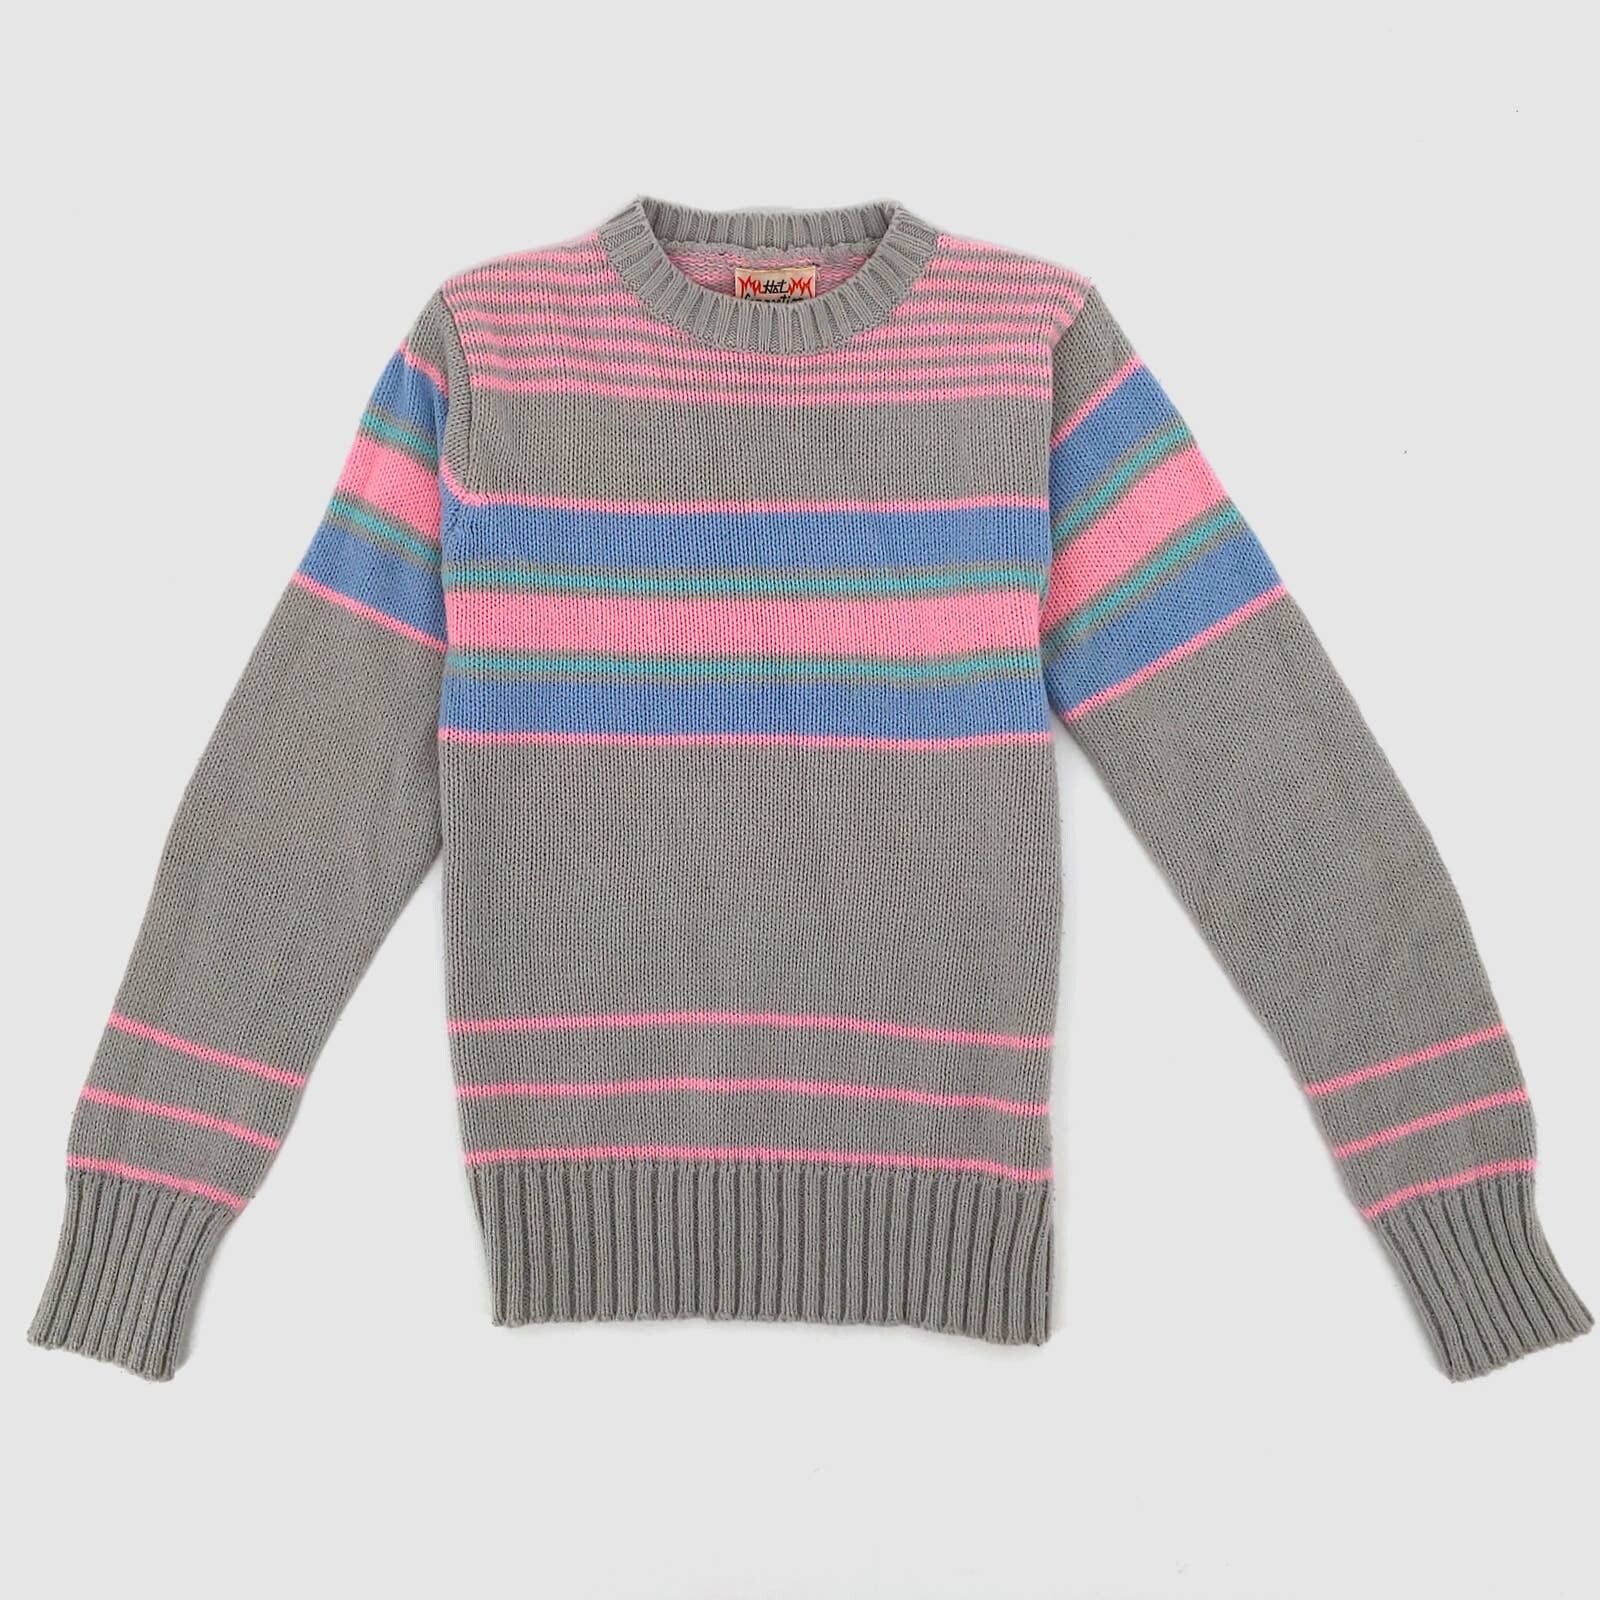 Vintage Vintage Pastel Colorblock Stripes Knit Sweater Unicorn Candy Size XS / US 0-2 / IT 36-38 - 1 Preview